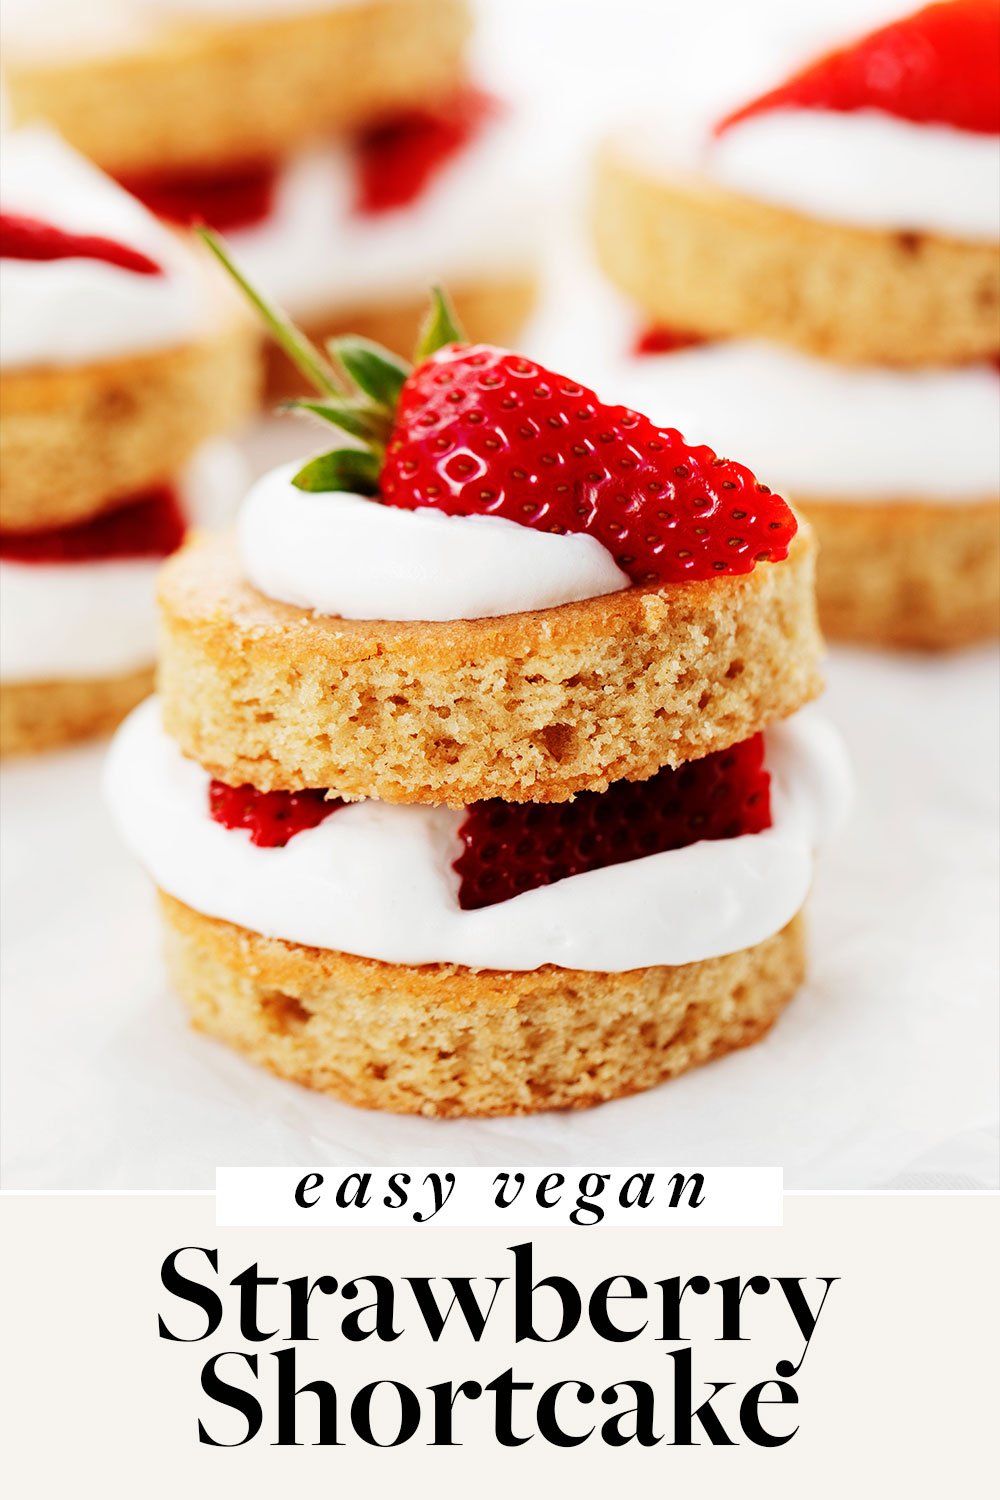 How to Make Vegan Strawberry Shortcake | The Full Helping